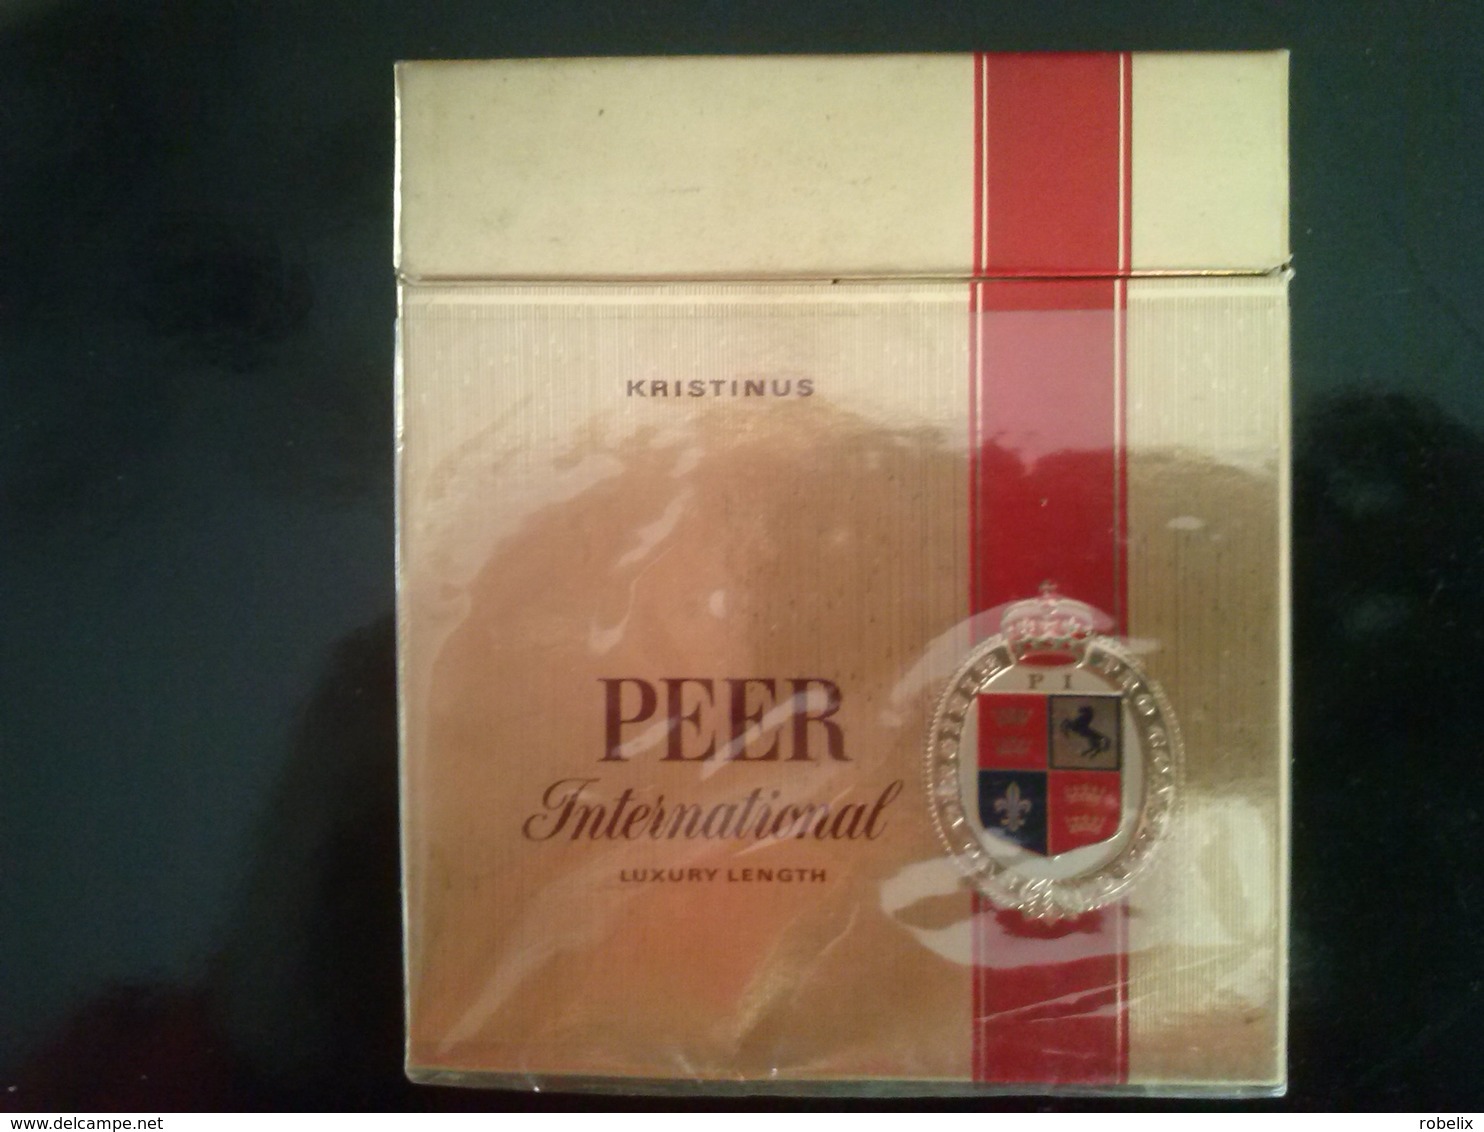 PEER INTERNATIONAL - Empty Cigarettes Carton Box - Around (environ) 1970 - Etuis à Cigarettes Vides